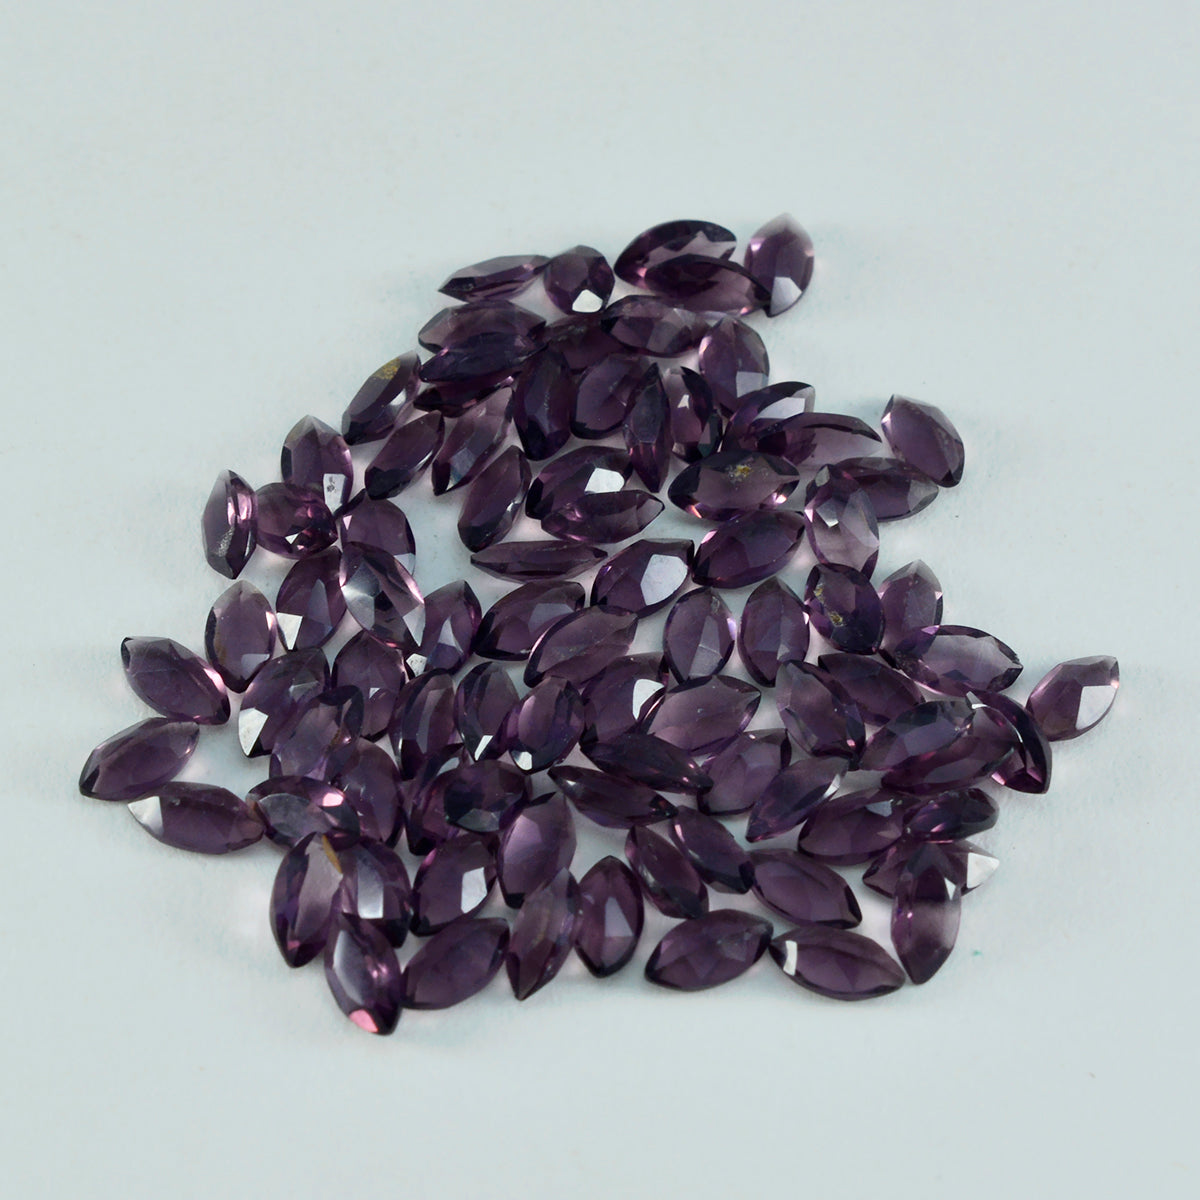 Riyogems 1PC Purple Amethyst CZ Faceted 2x4 mm Marquise Shape beautiful Quality Loose Gems